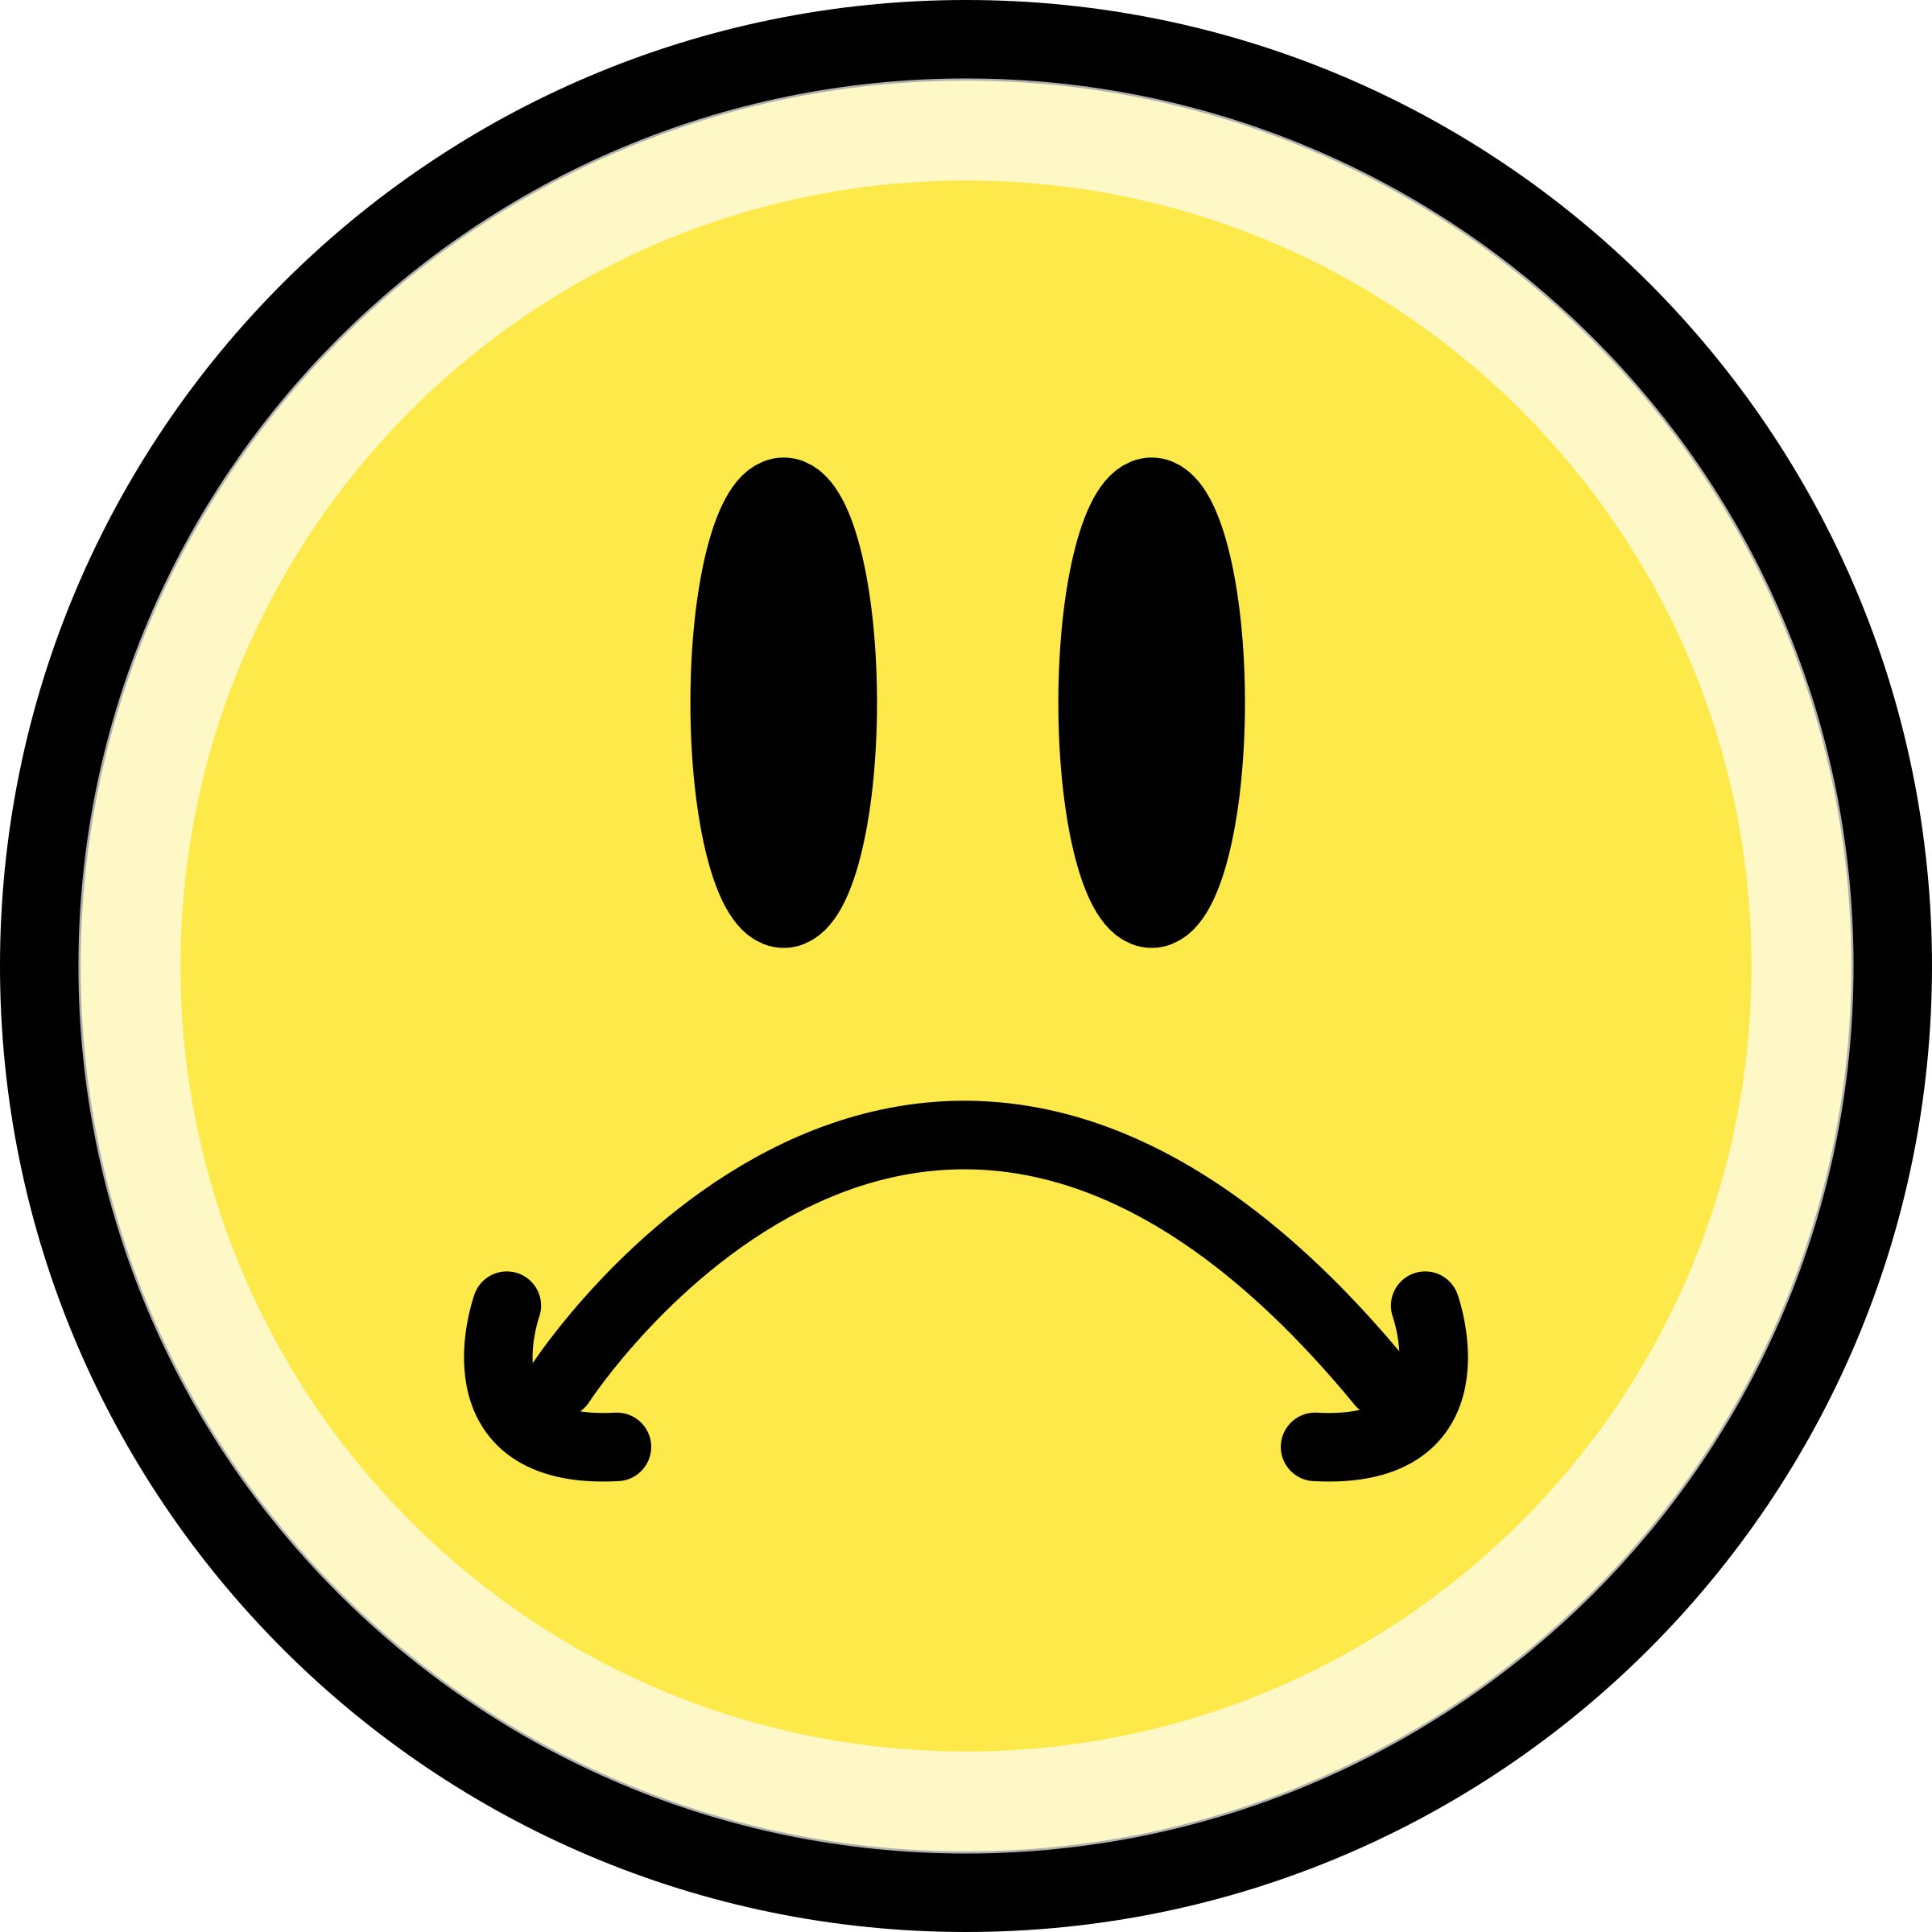 Sad face emoticon yellow. Worry clipart negative emotion